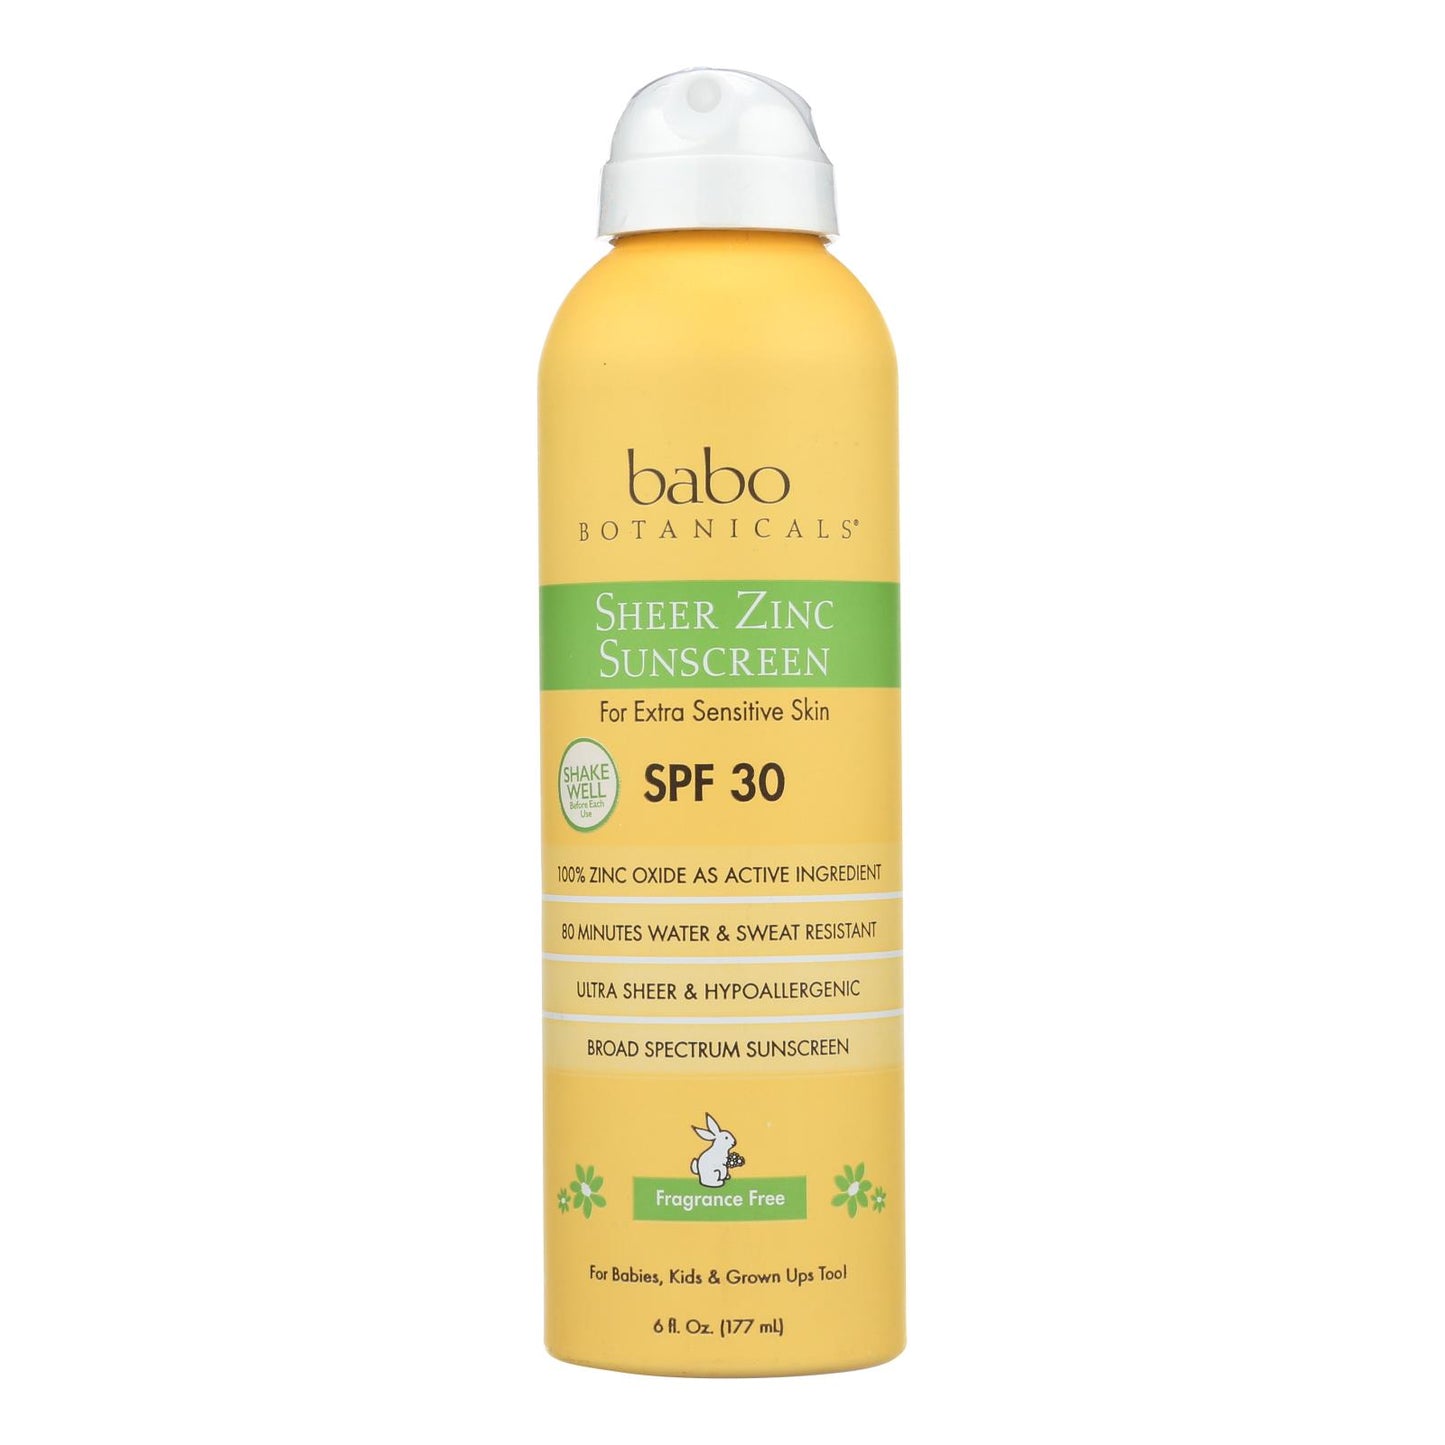 Babo Botanicals Sheer Zinc Sunscreen Spray SPF 30, 6 oz.